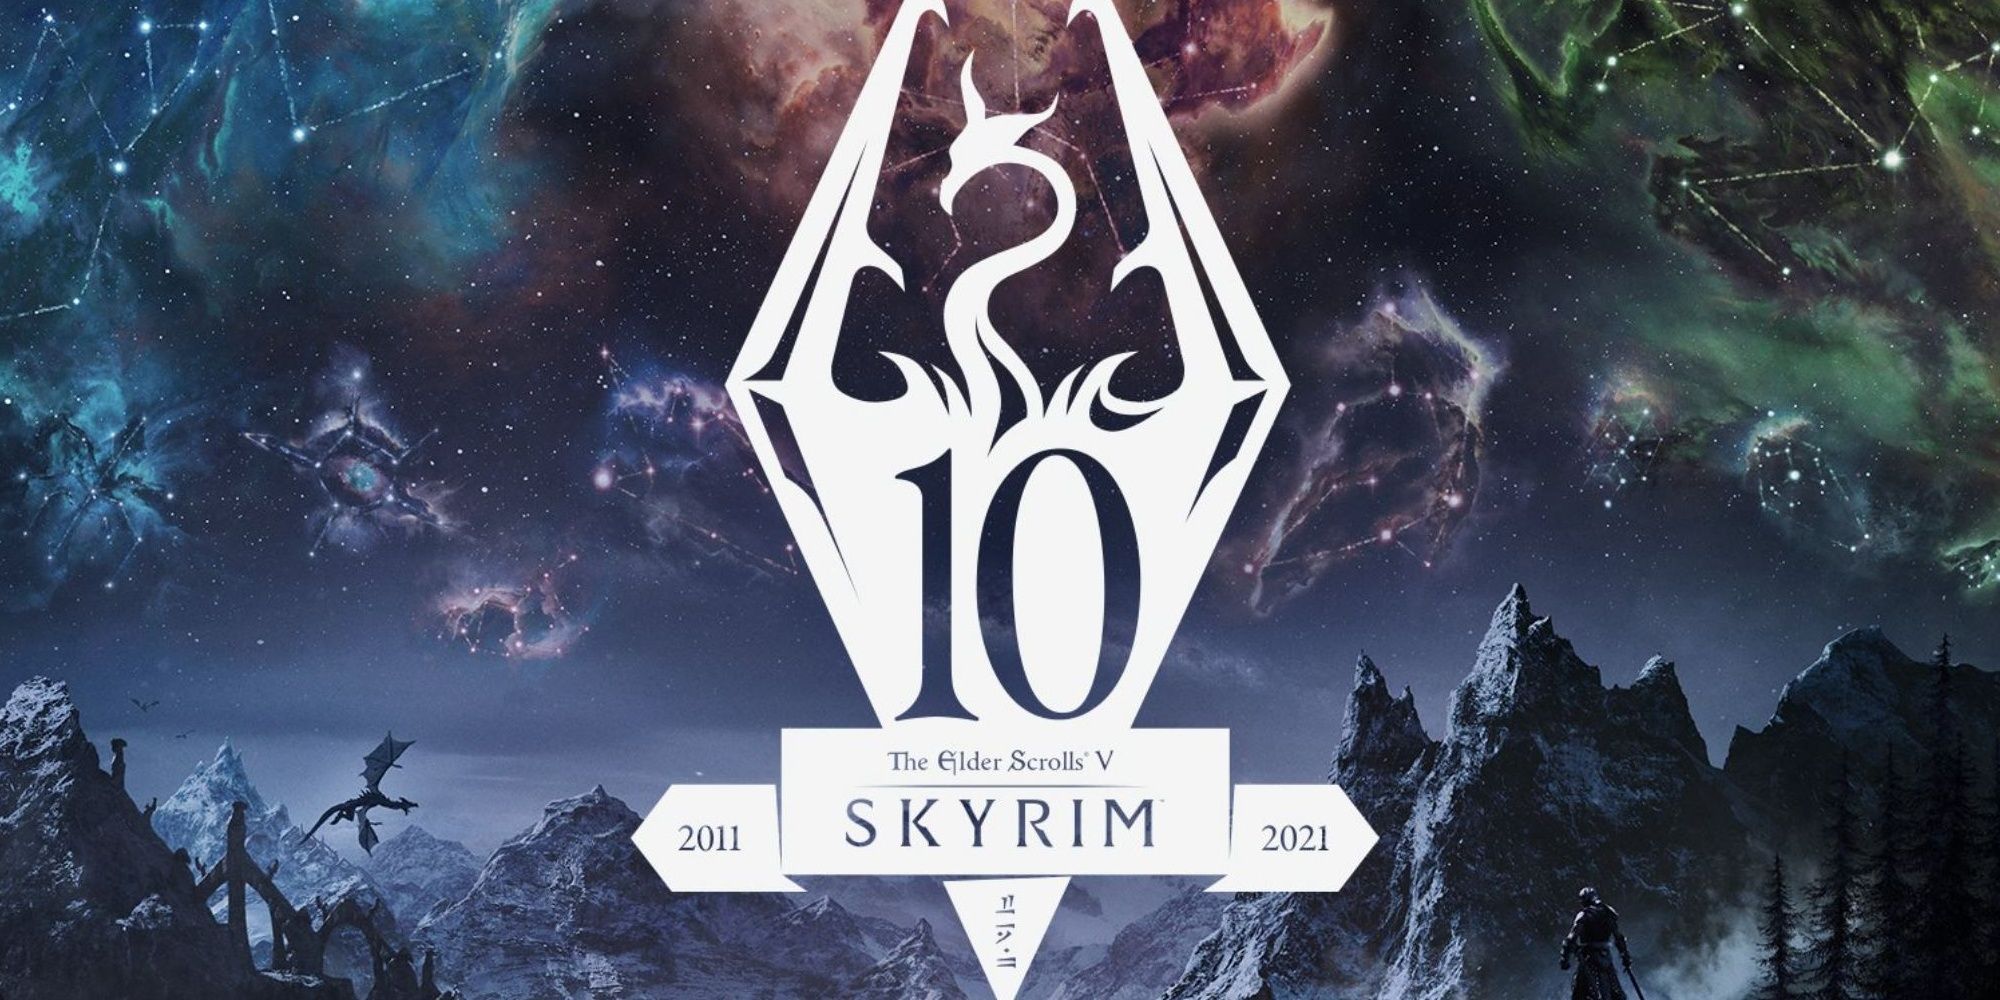 Skyrim anniversary logo, star filled sky in skyrim